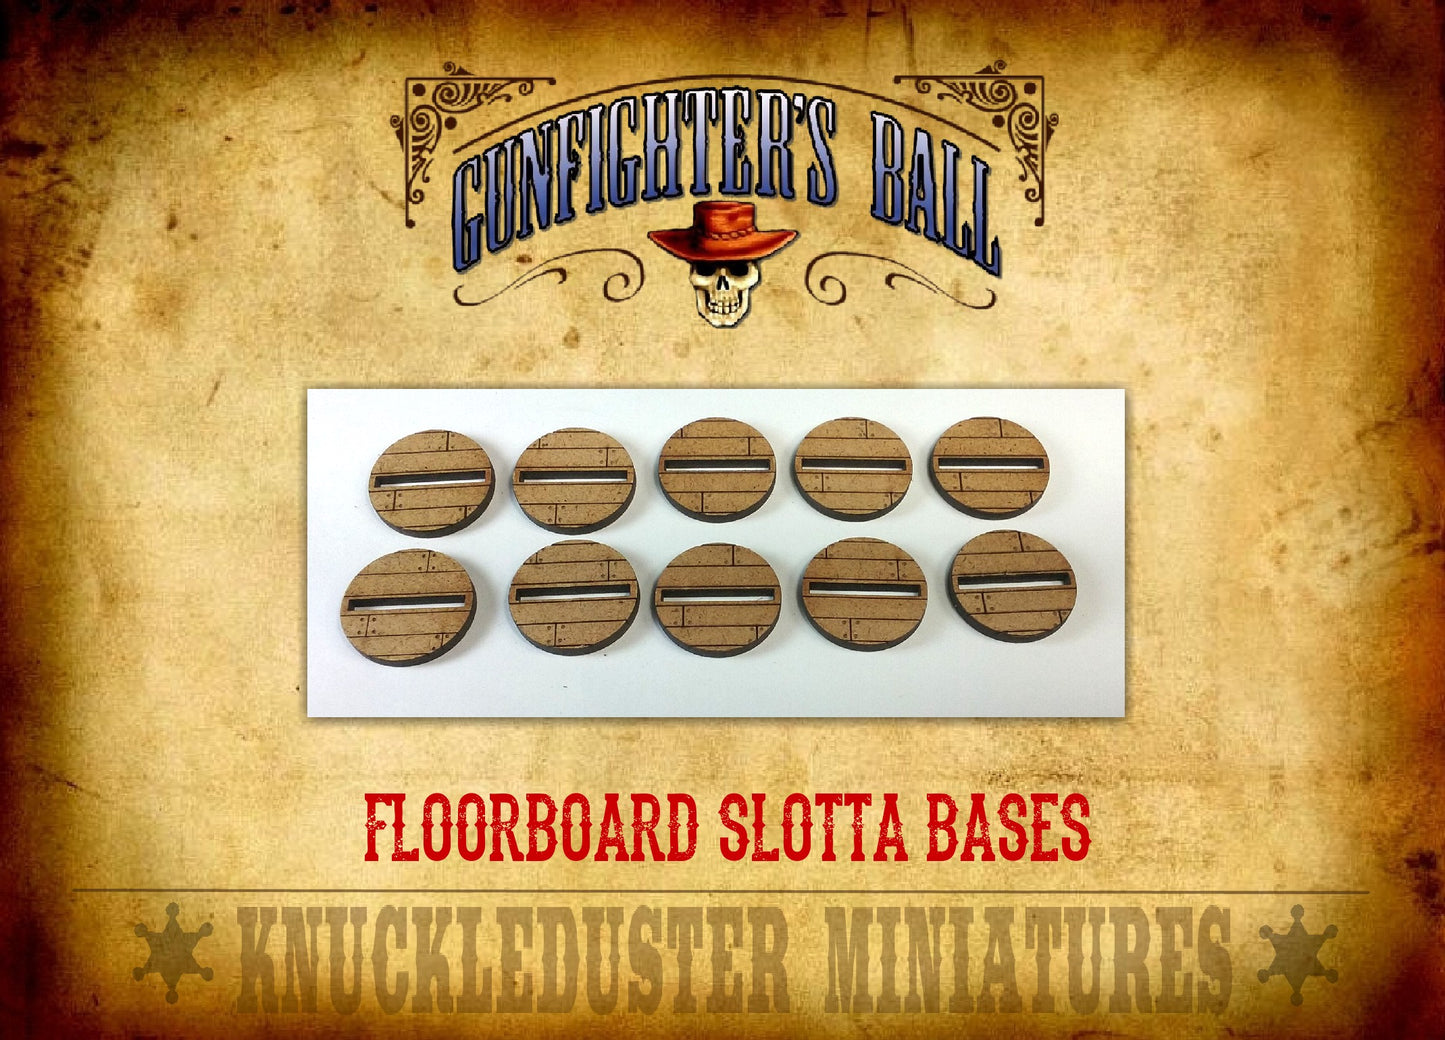 25mm MDF Floorboard Slotta Bases